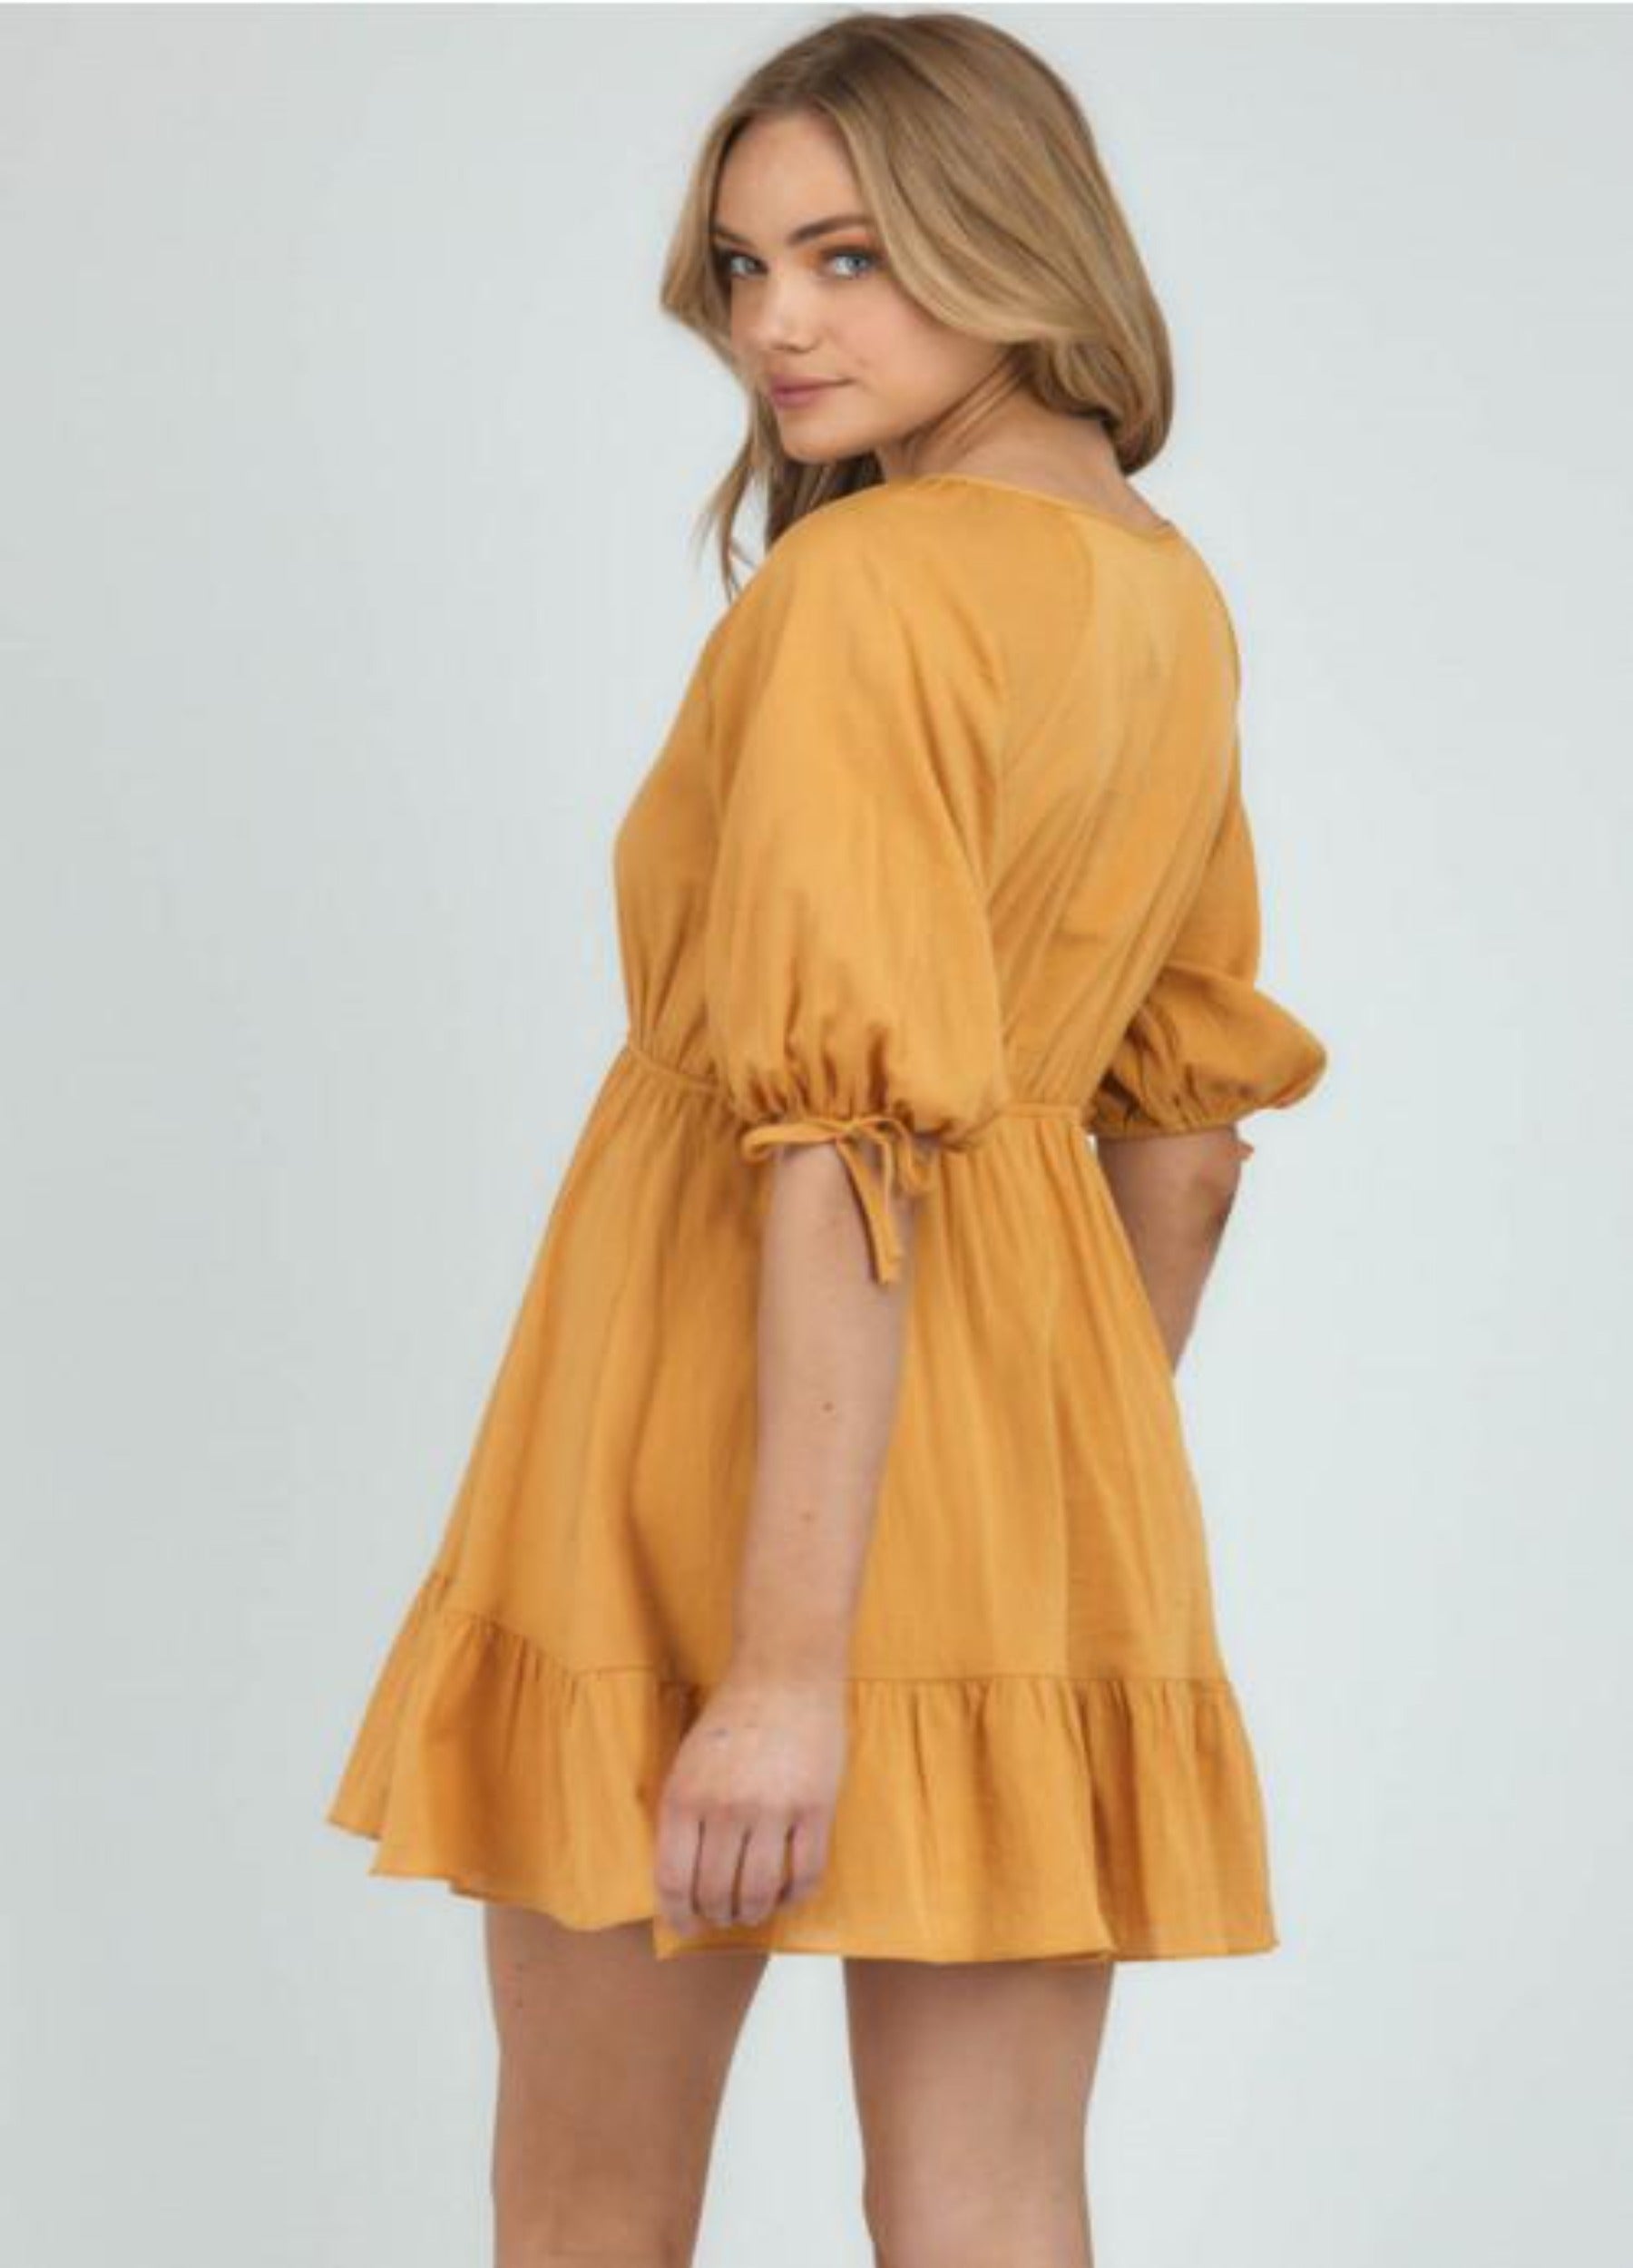 Blonde woman wearing yellow a line dress looking back